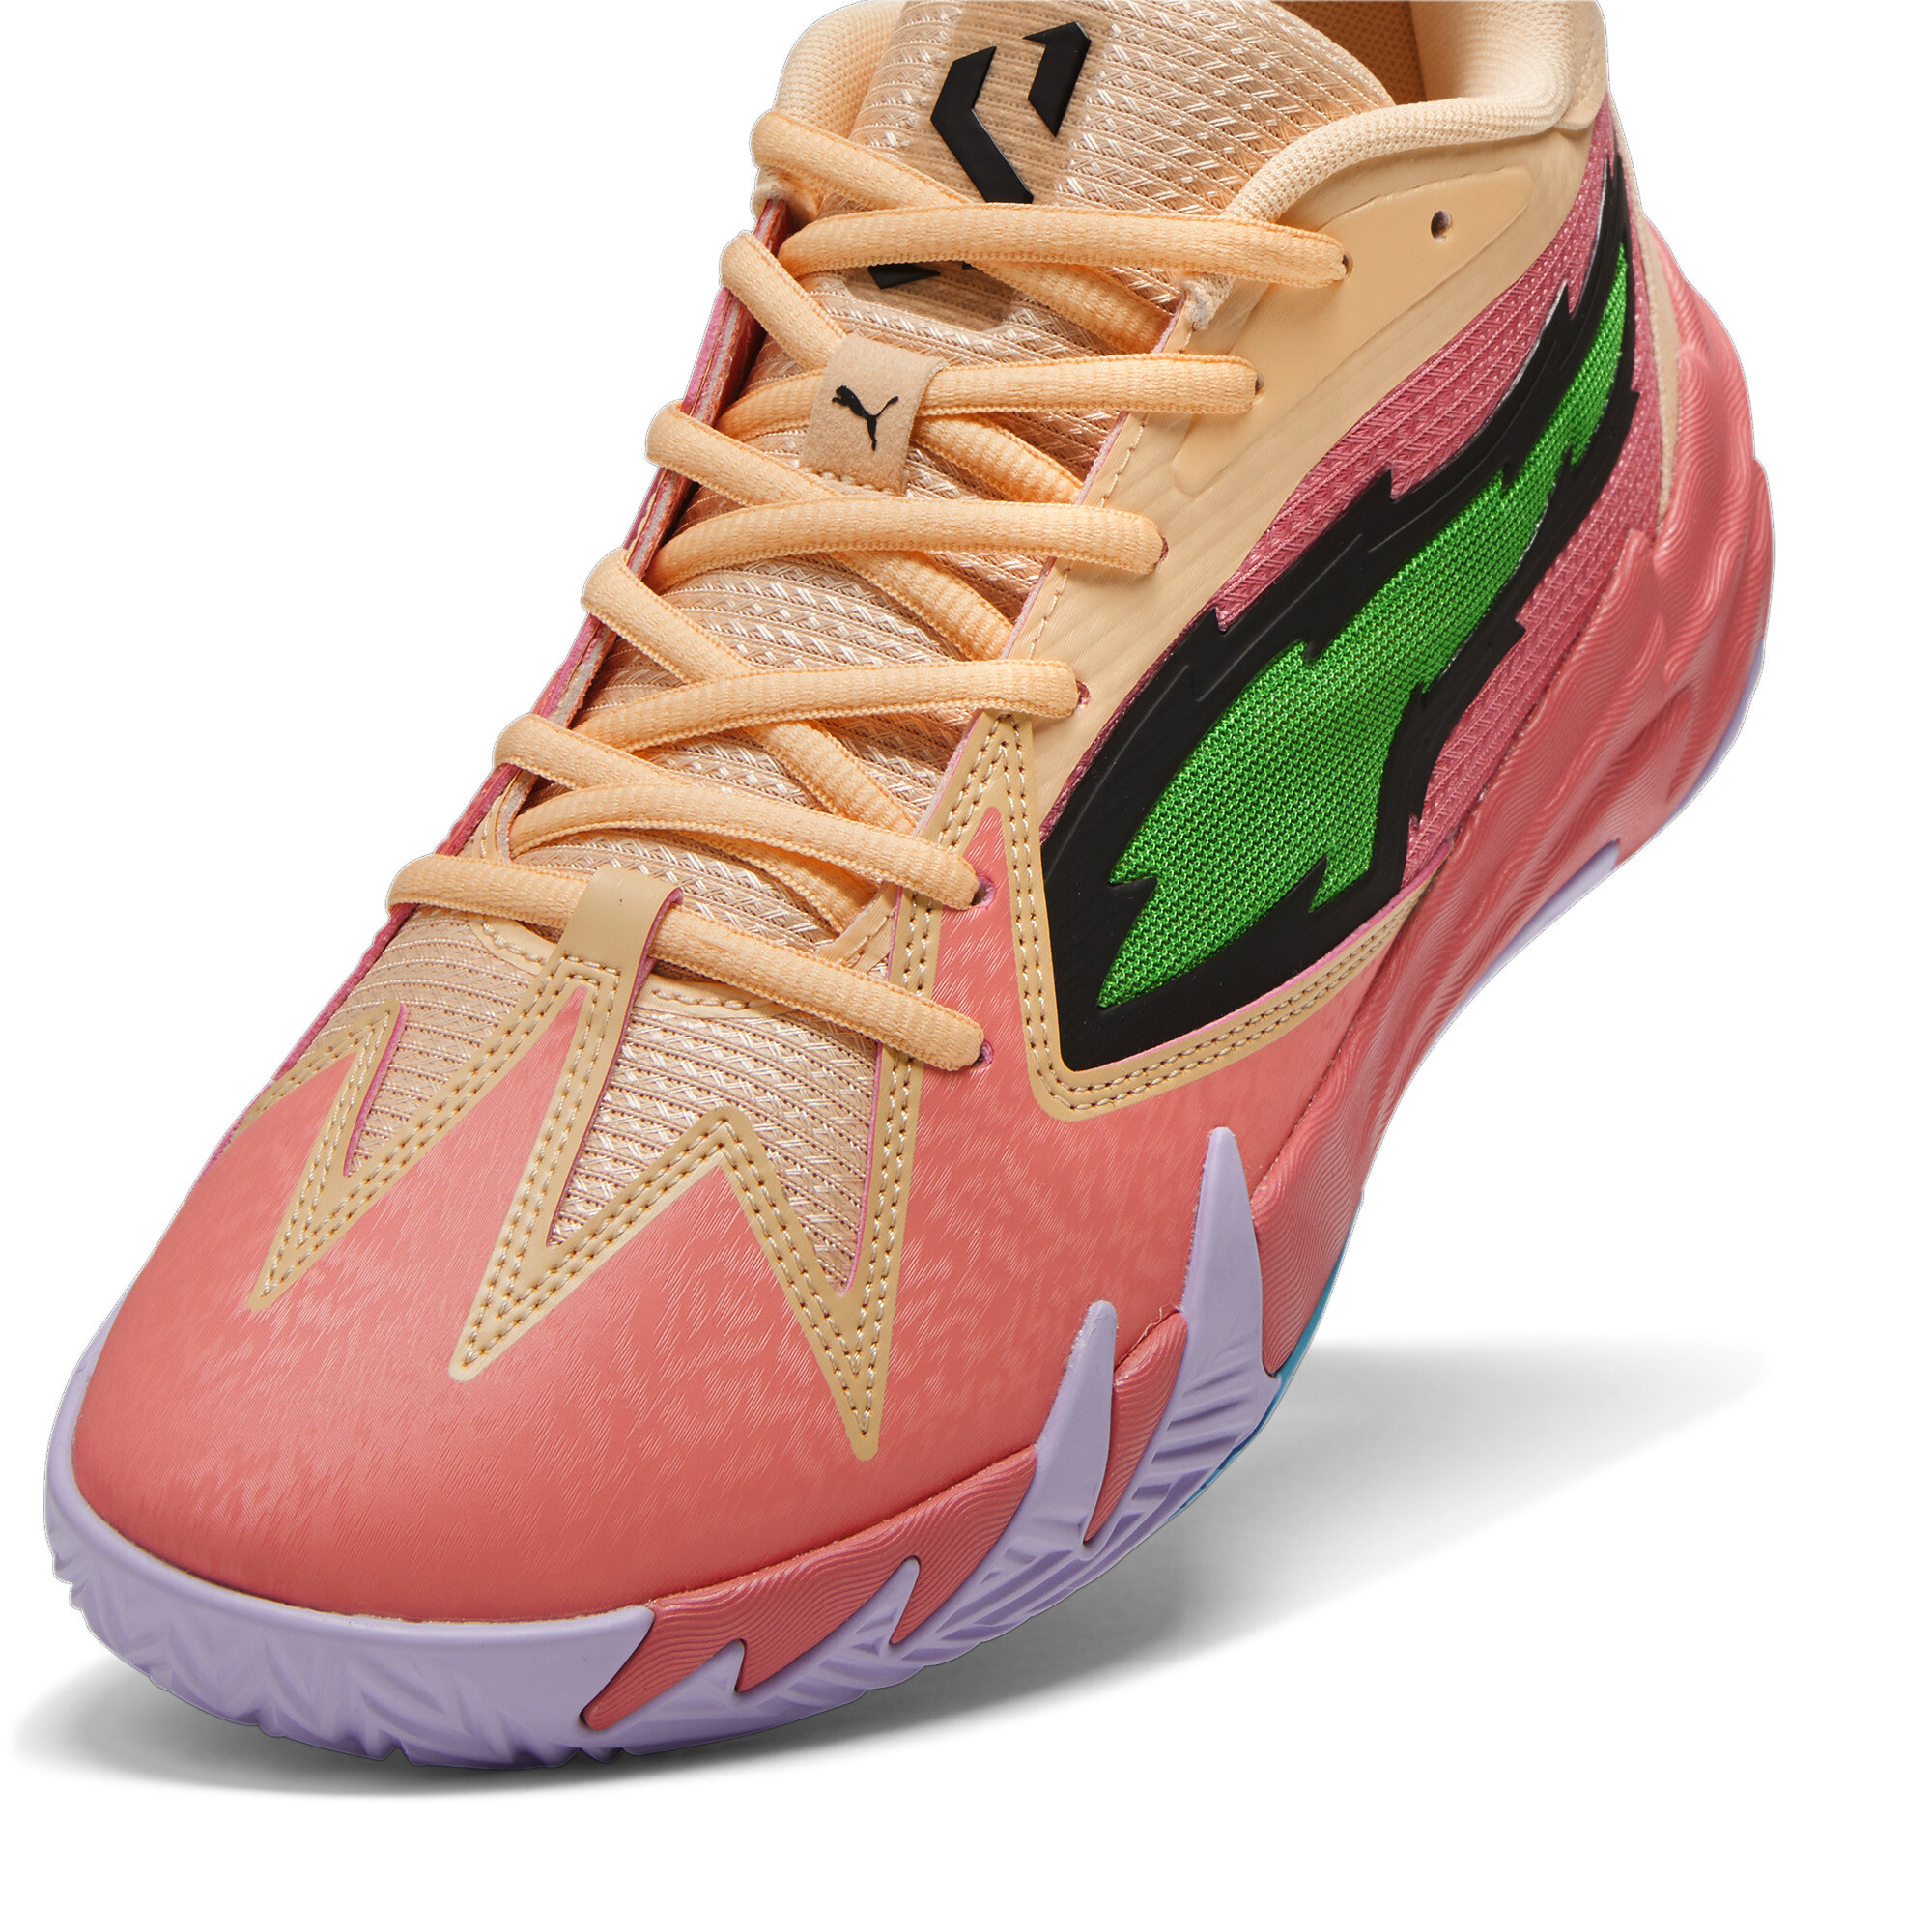 Puma Scoot Zeros Georgia Peach Basketball Shoes, Pink, Size 42.5, Shoes